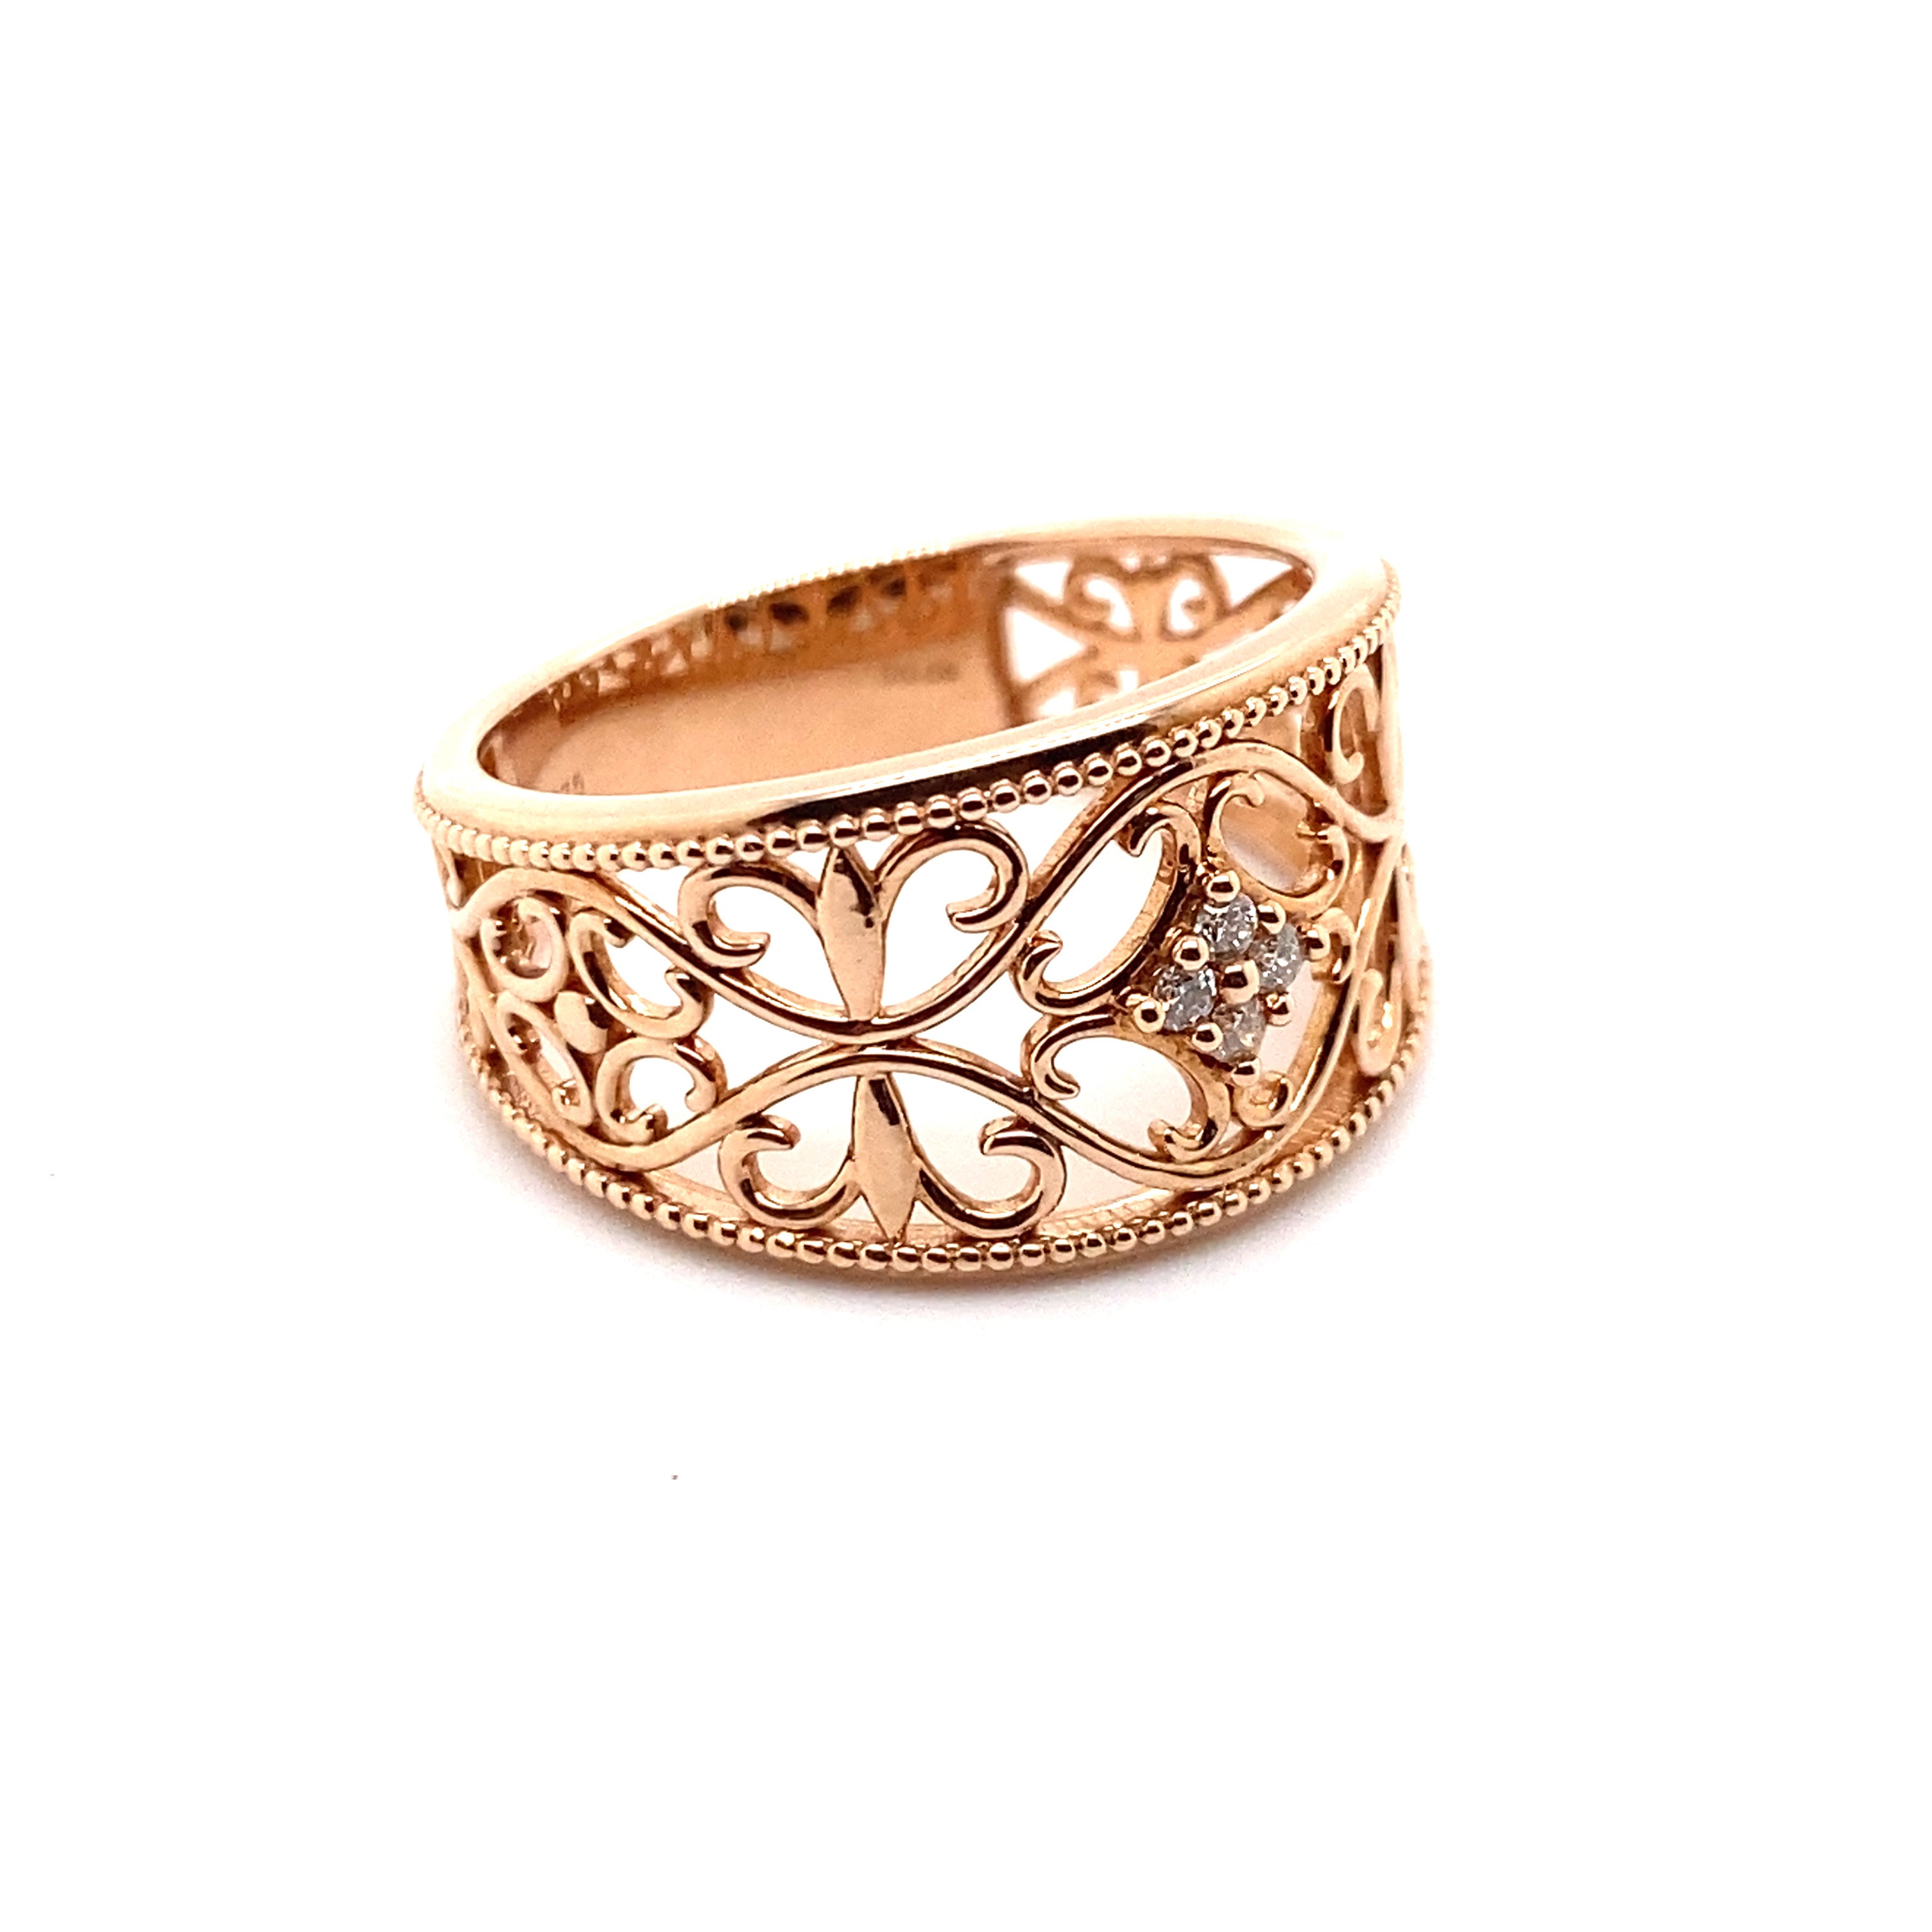 9ct rose gold filagree. diamond dress ring.